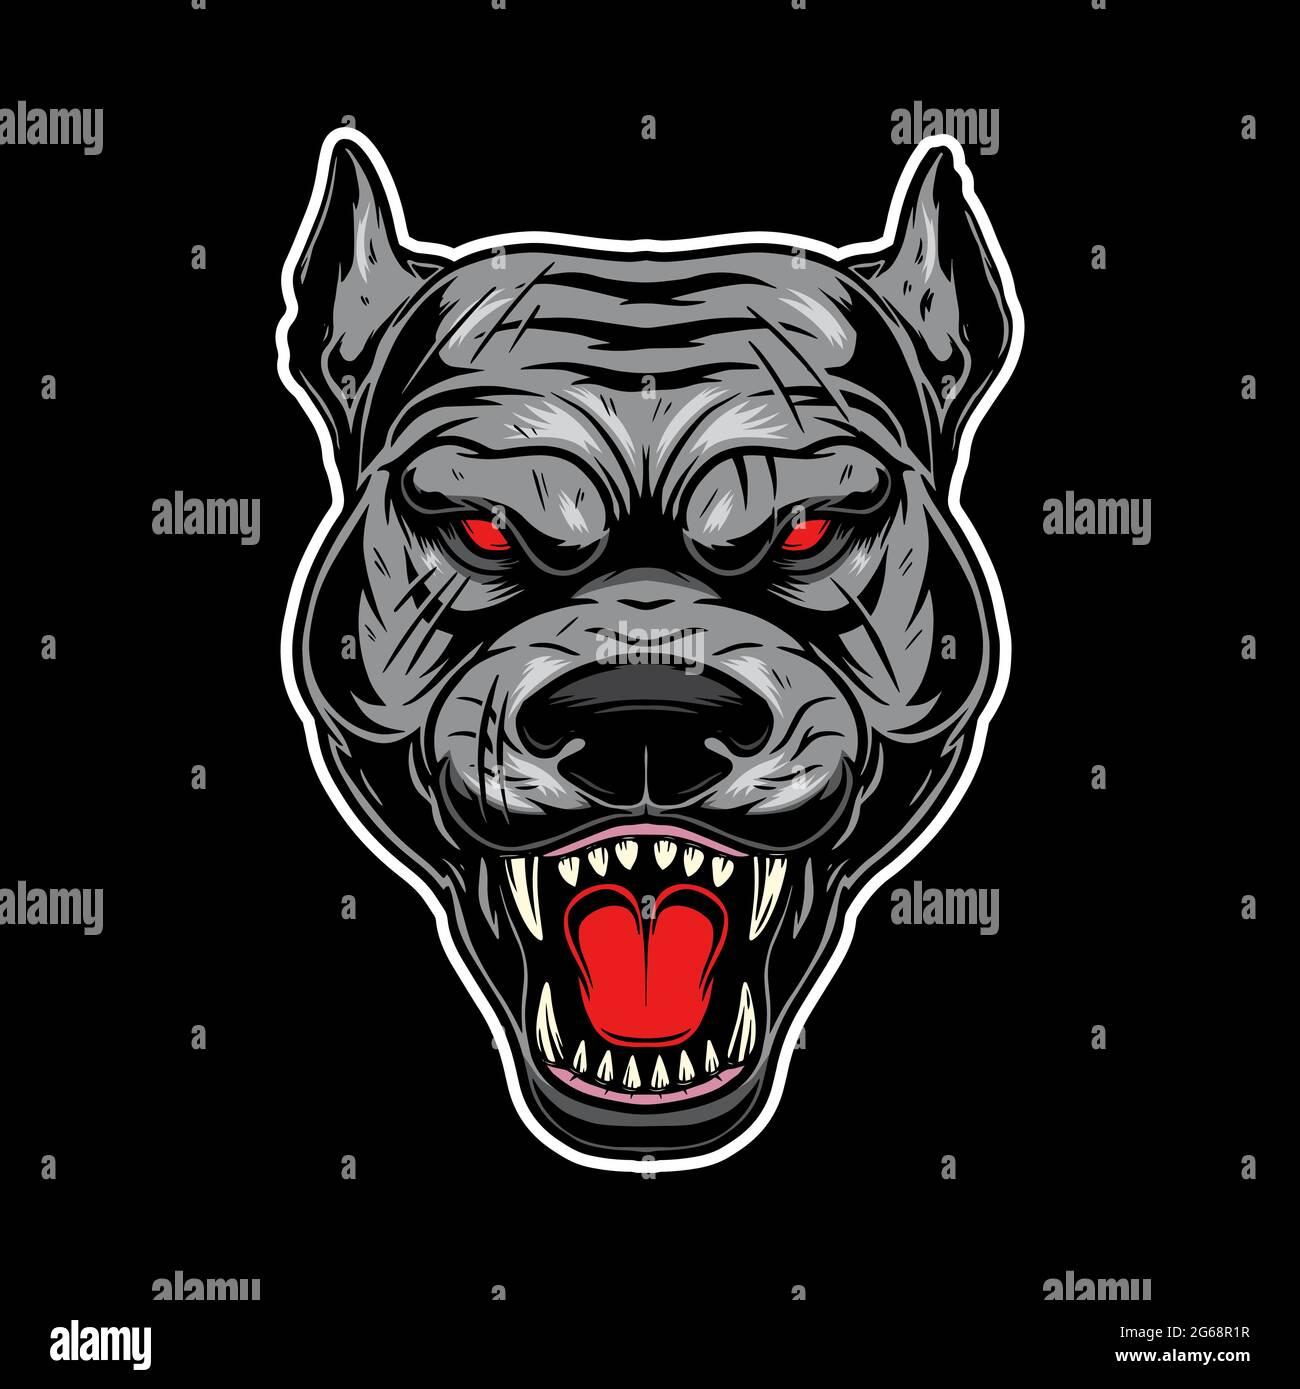 Illustration Of Angry Dog Head Design Element For Logo Label